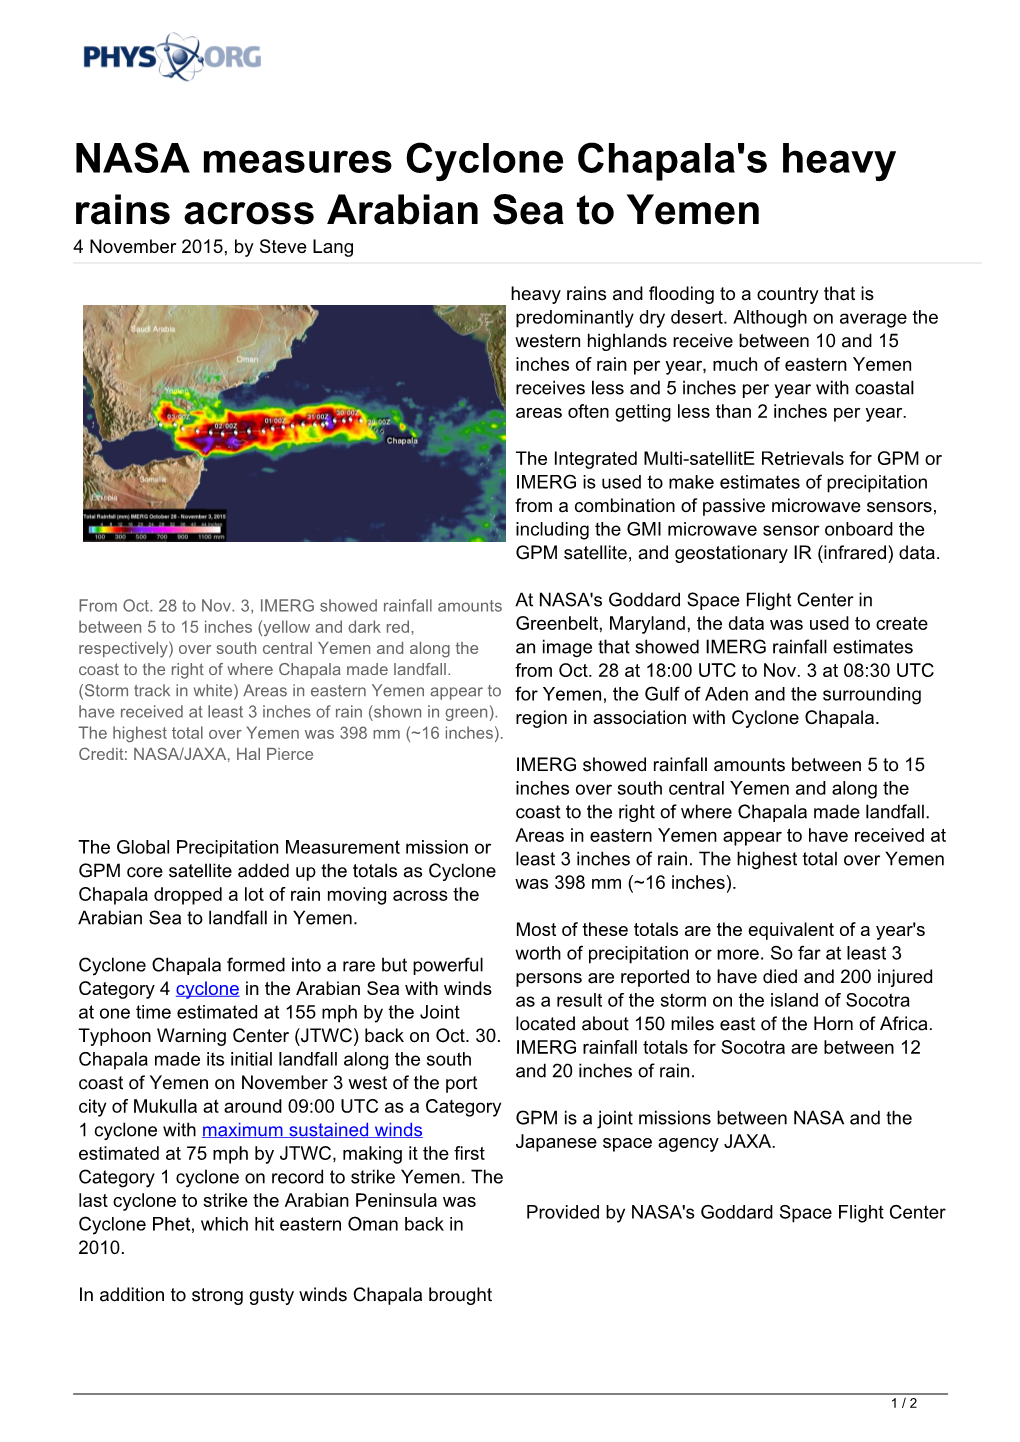 NASA Measures Cyclone Chapala's Heavy Rains Across Arabian Sea to Yemen 4 November 2015, by Steve Lang